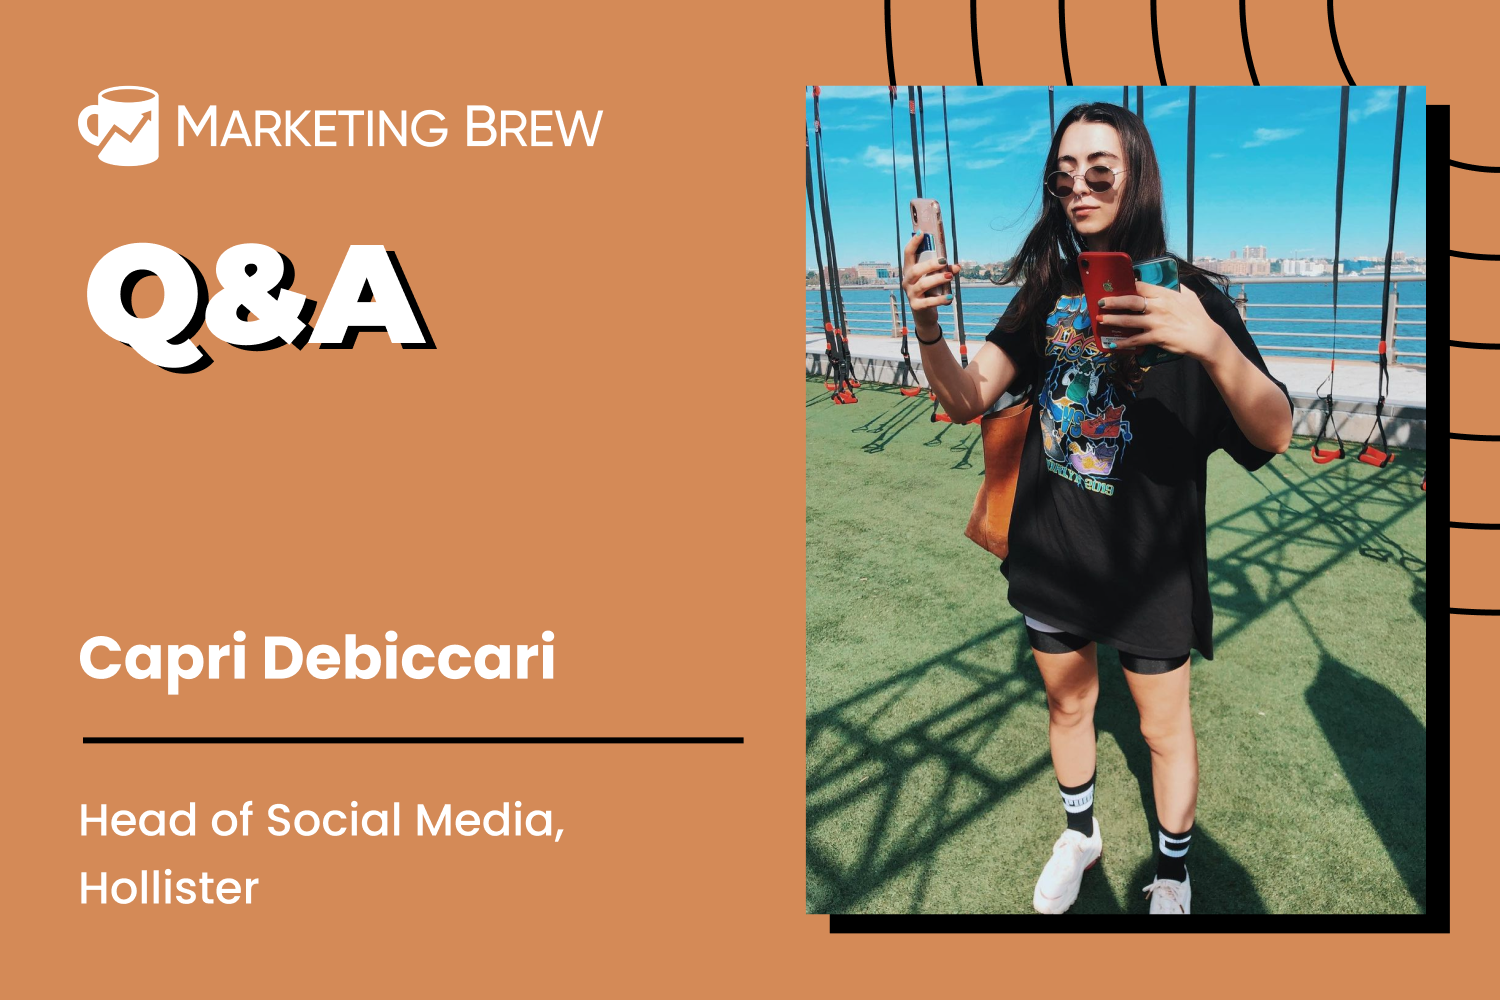 Capri Debiccari in Marketing Brew's "head of social media" Q&A series